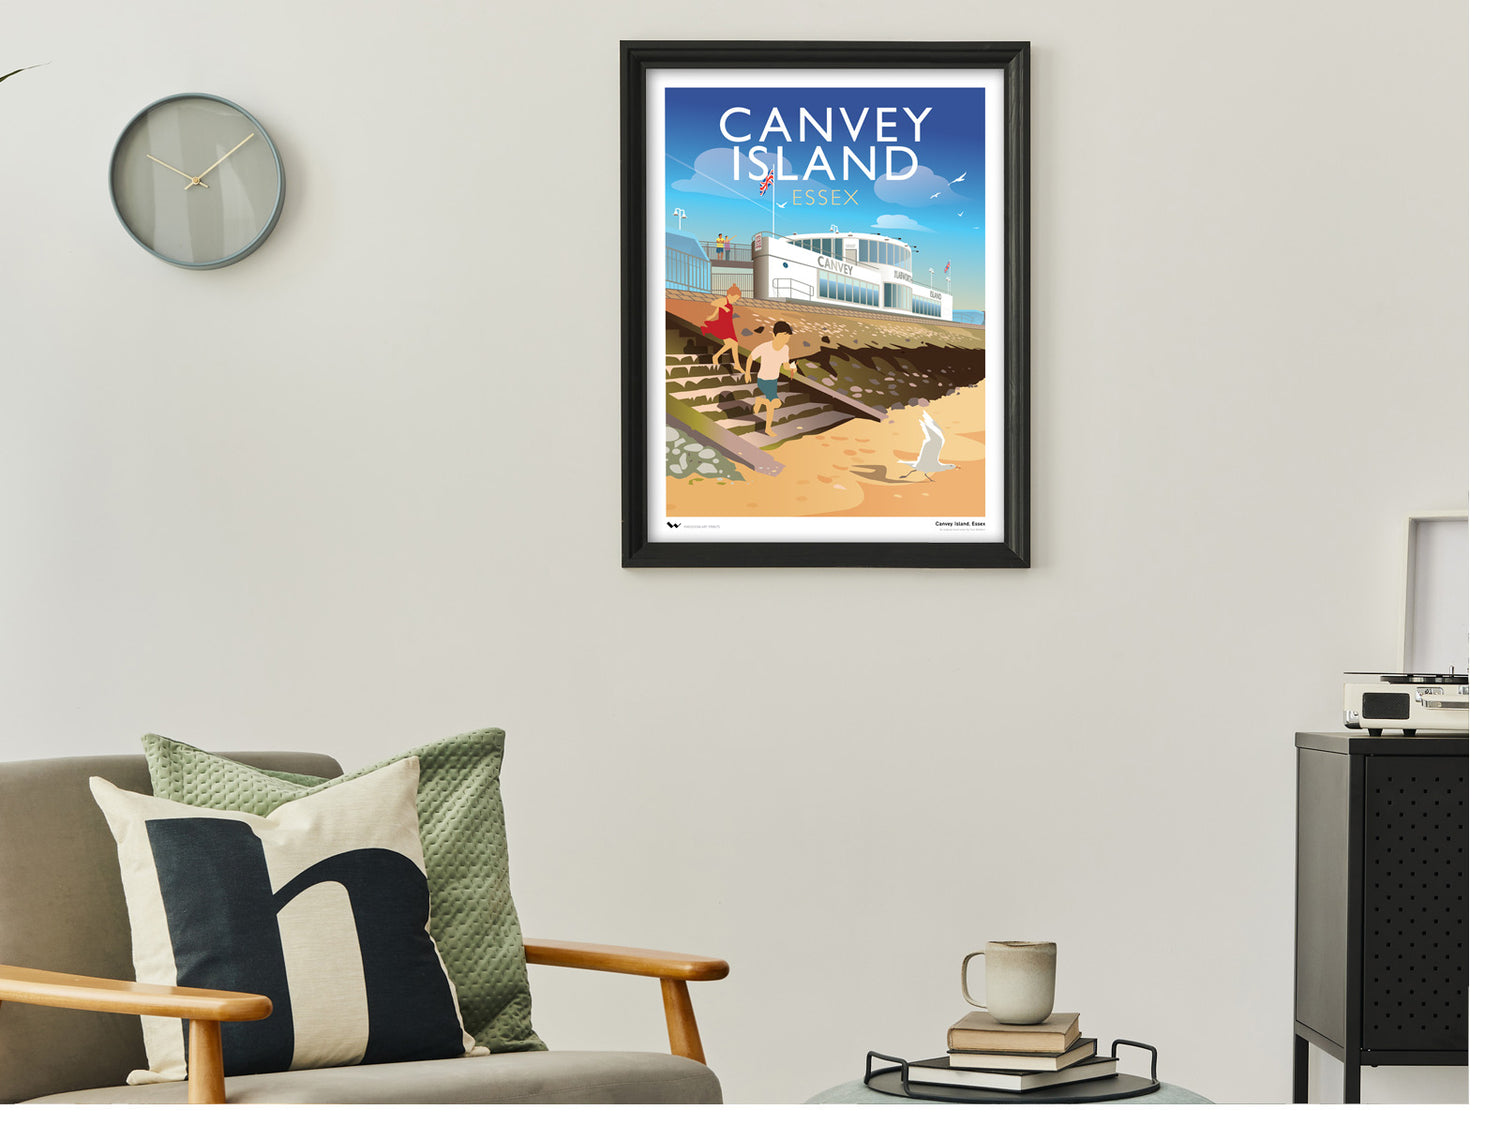 Canvey Island, Essex Giclée Print